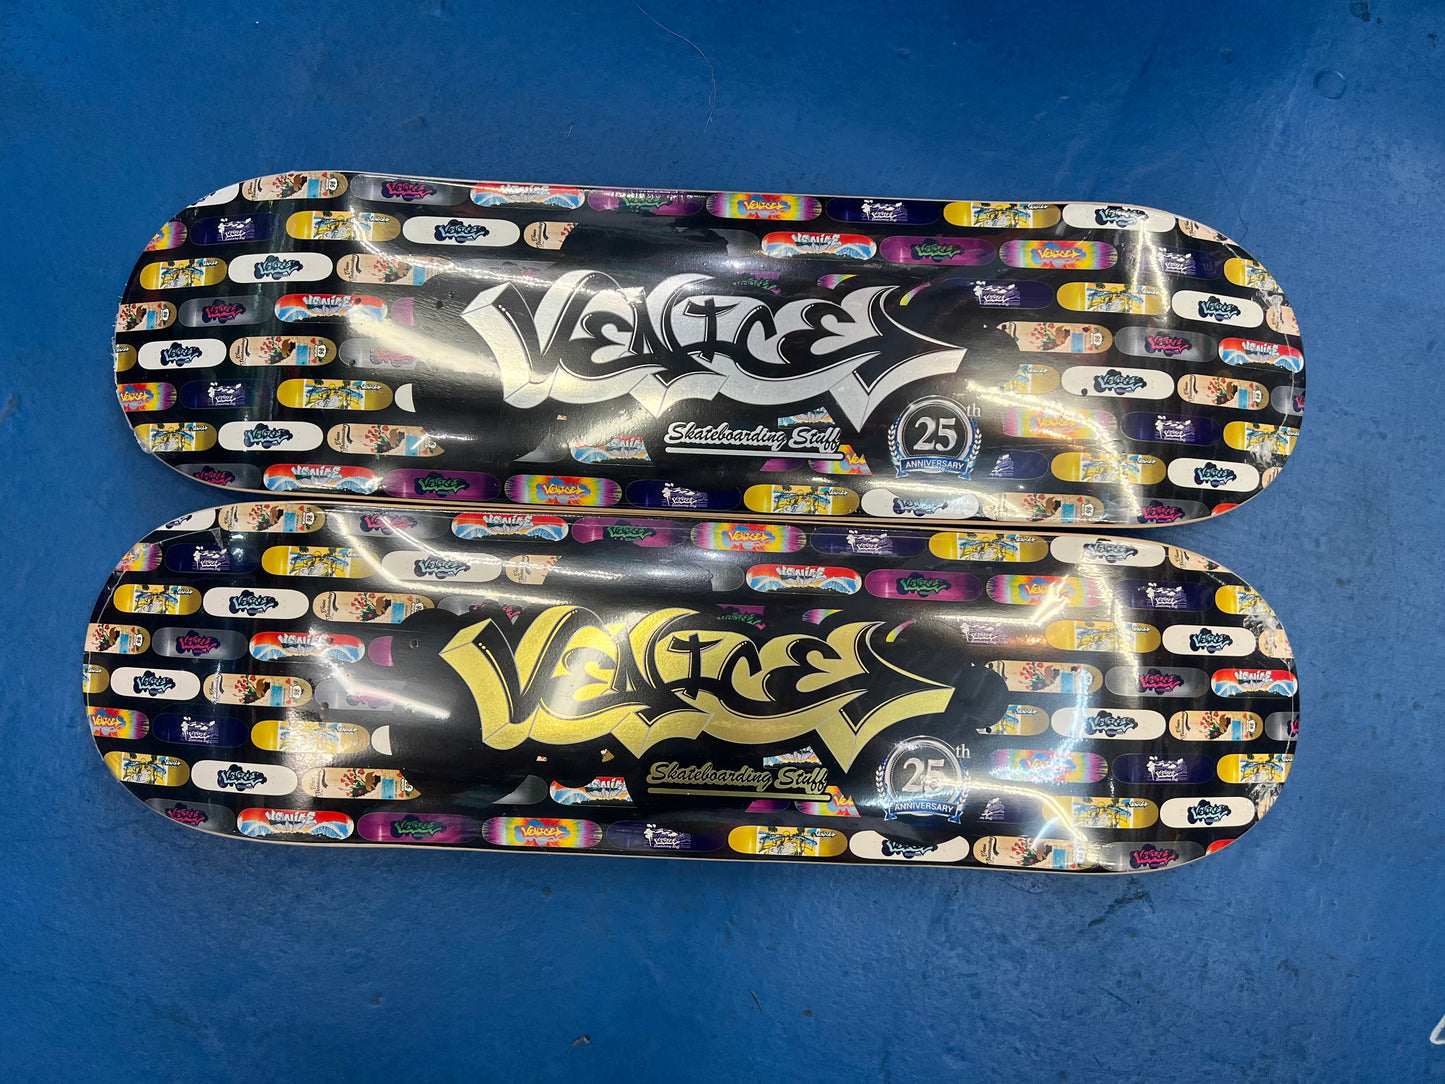 NEW venice skateboarding stuff shop deck 25th anniversary